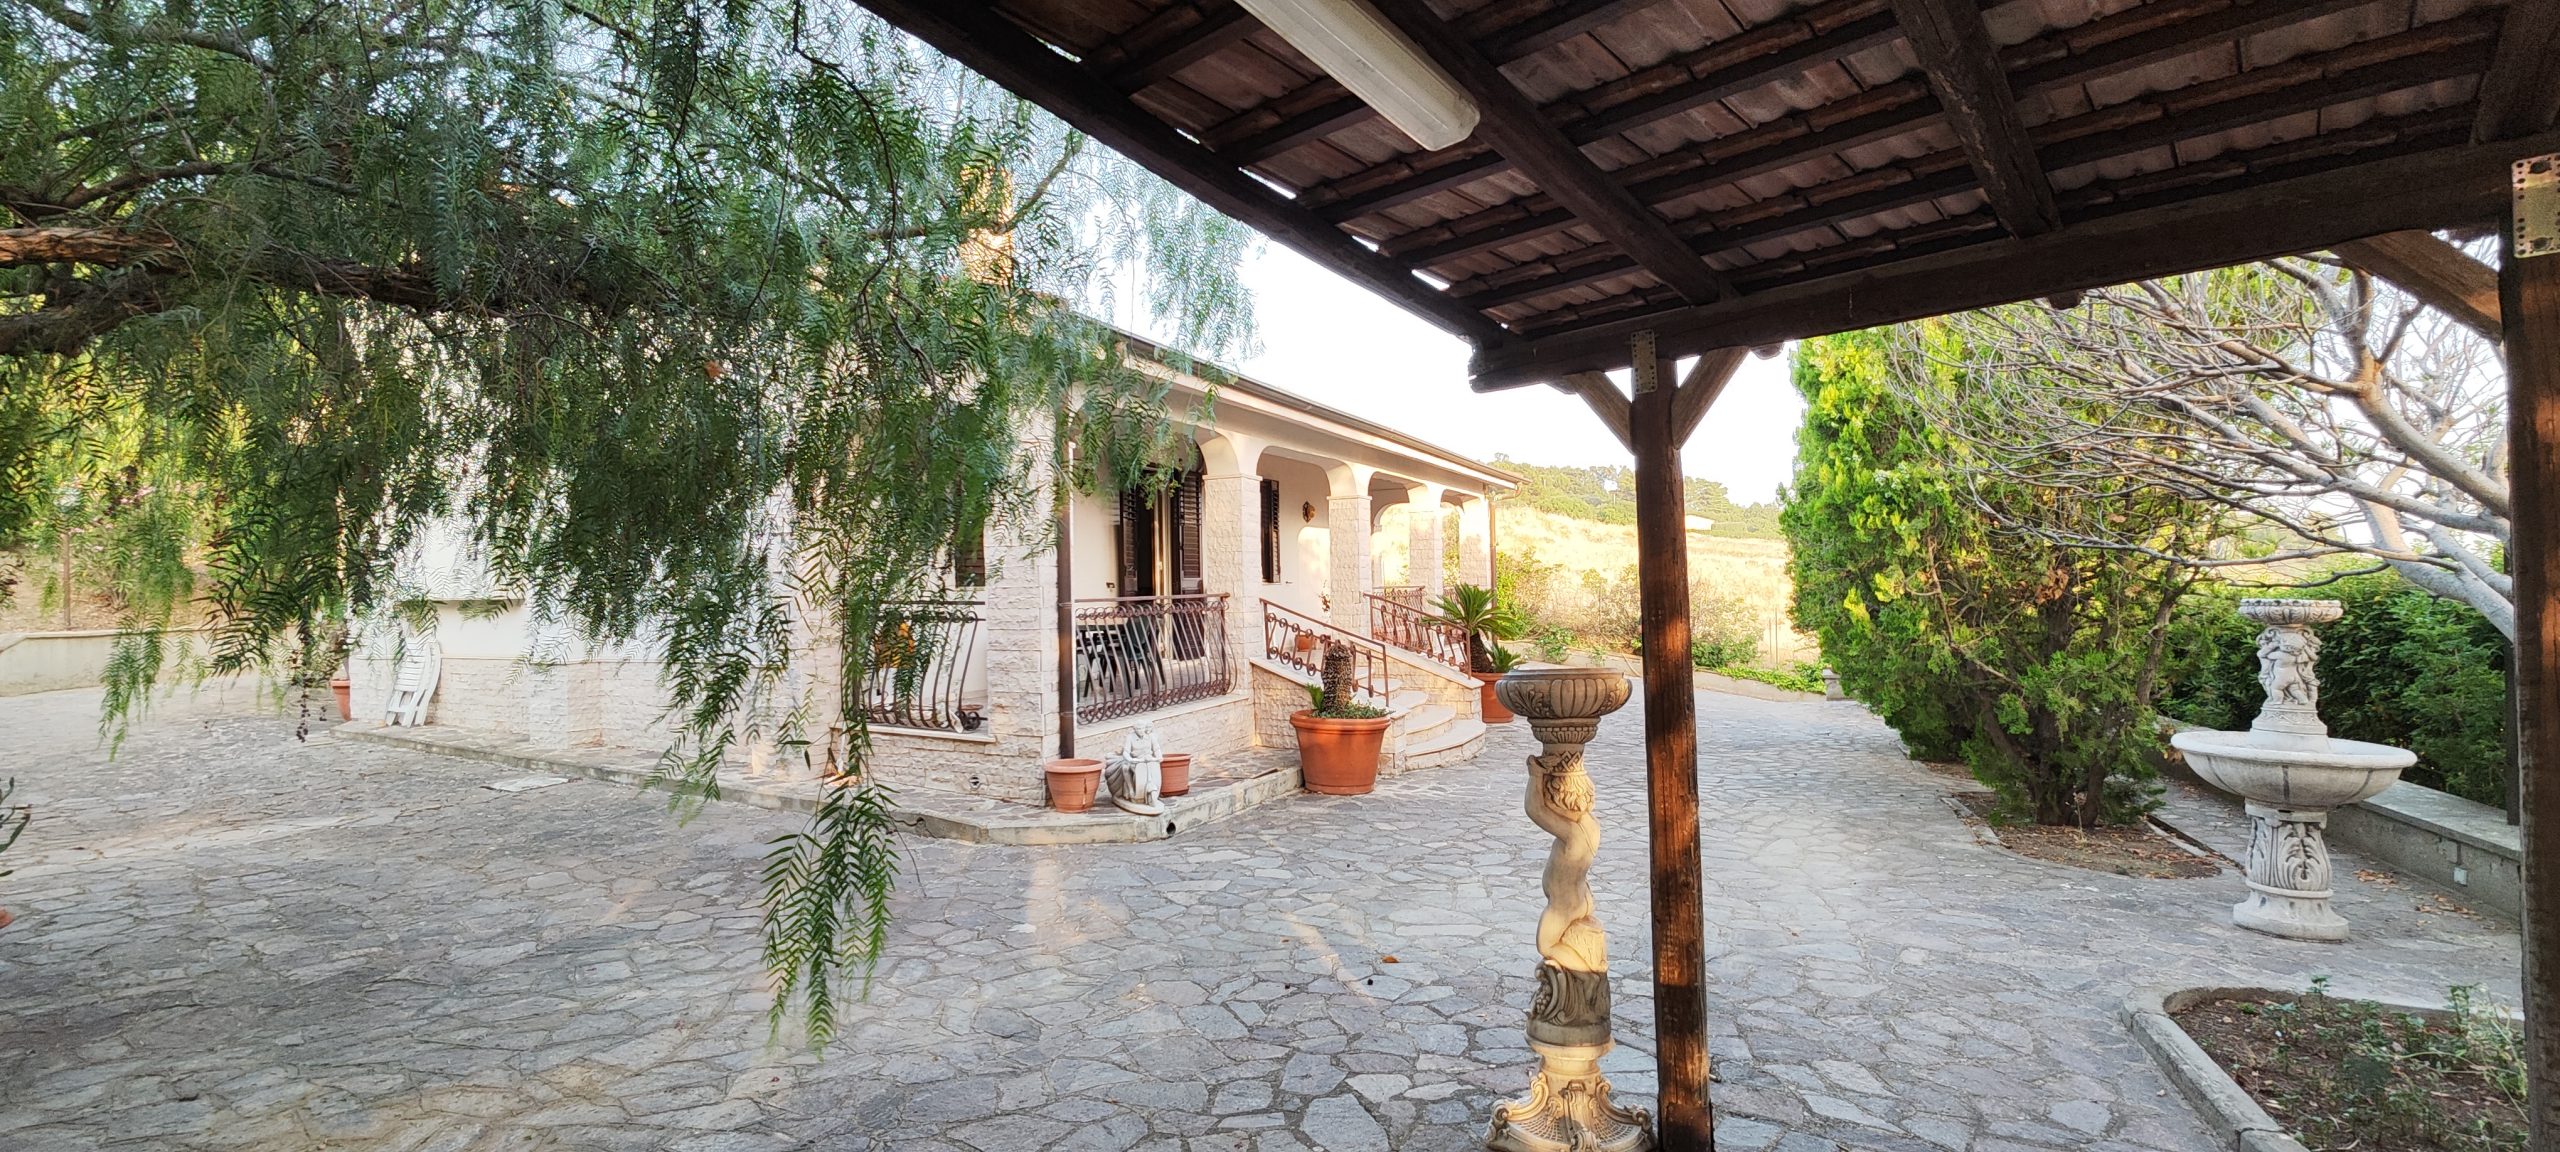 Villa rustica Gibil Gabib Caltanissetta